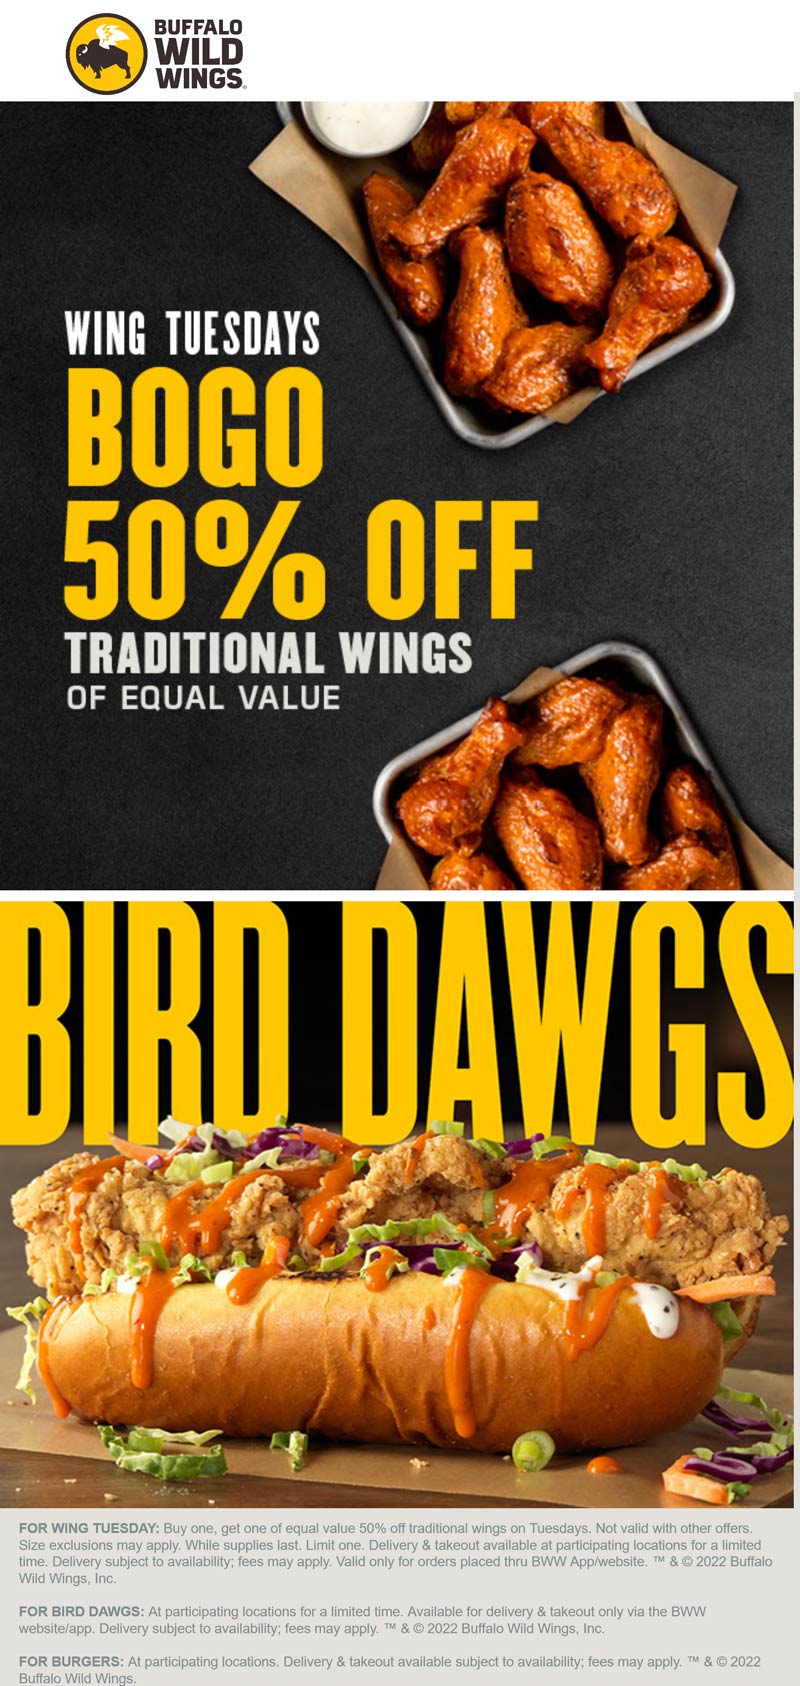 Buffalo Wild Wings restaurants Coupon  Second chicken wings 50% off today at Buffalo Wild Wings restaurants #buffalowildwings 